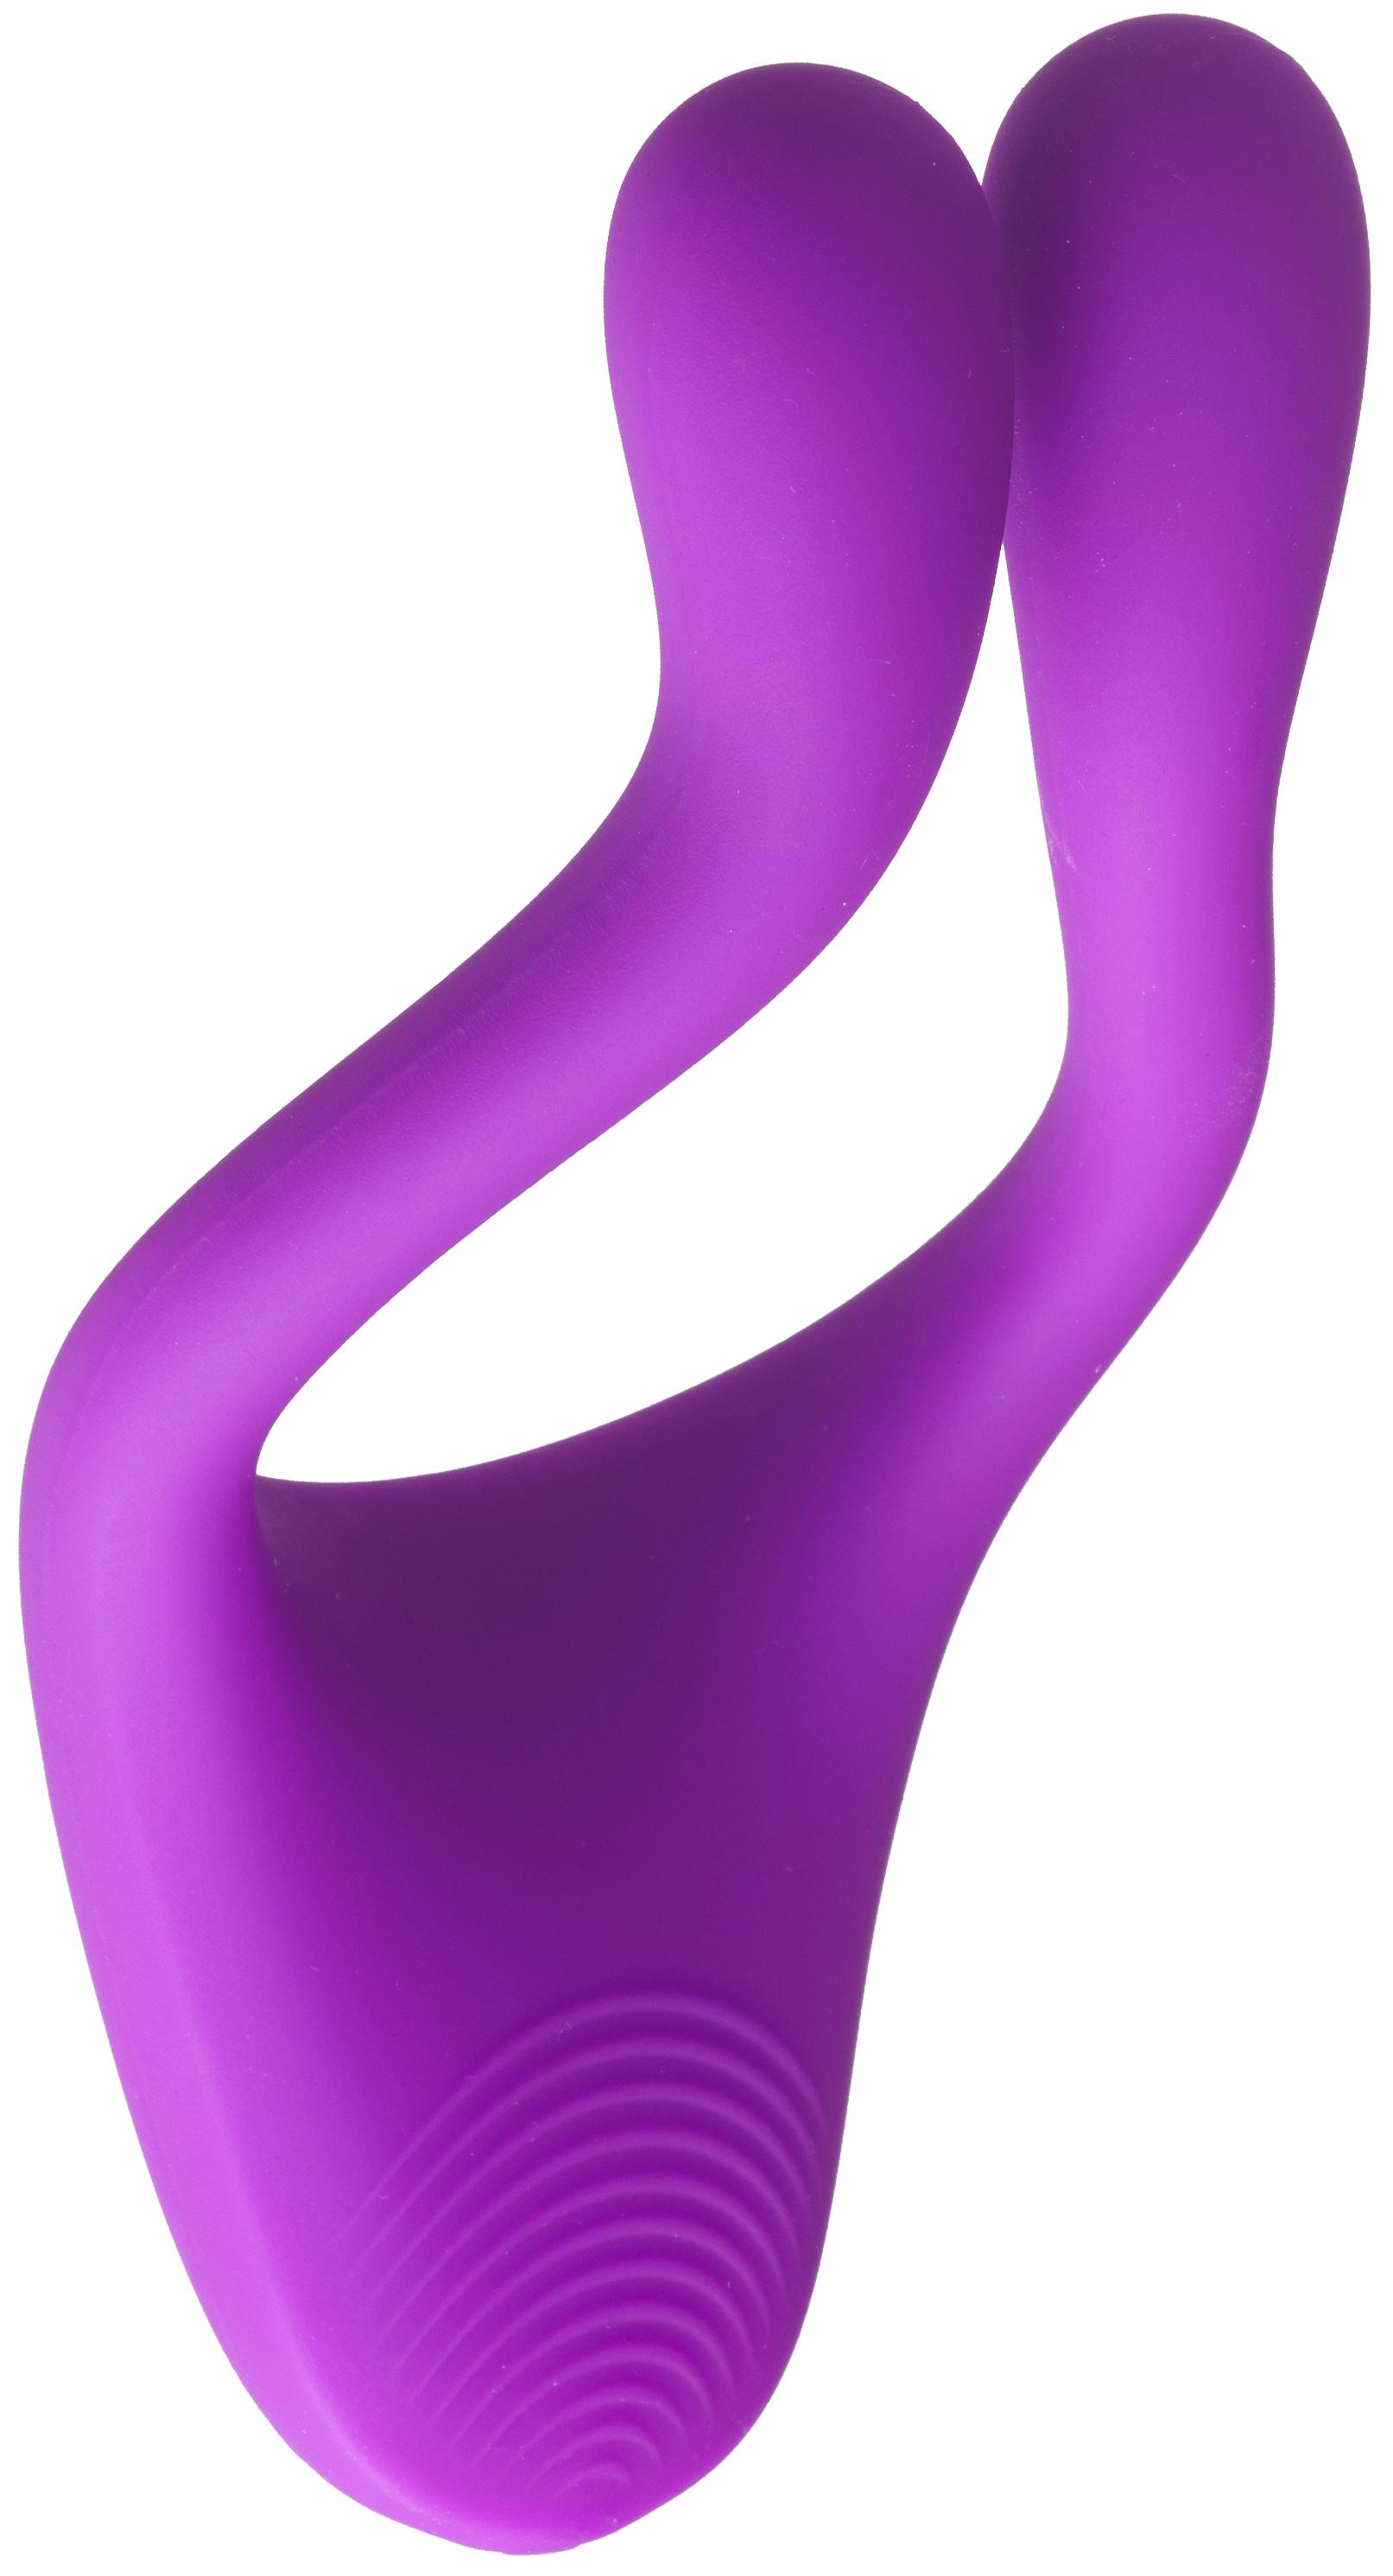 BeauMents Doppio Pair Vibrator, Purple, 9 cm